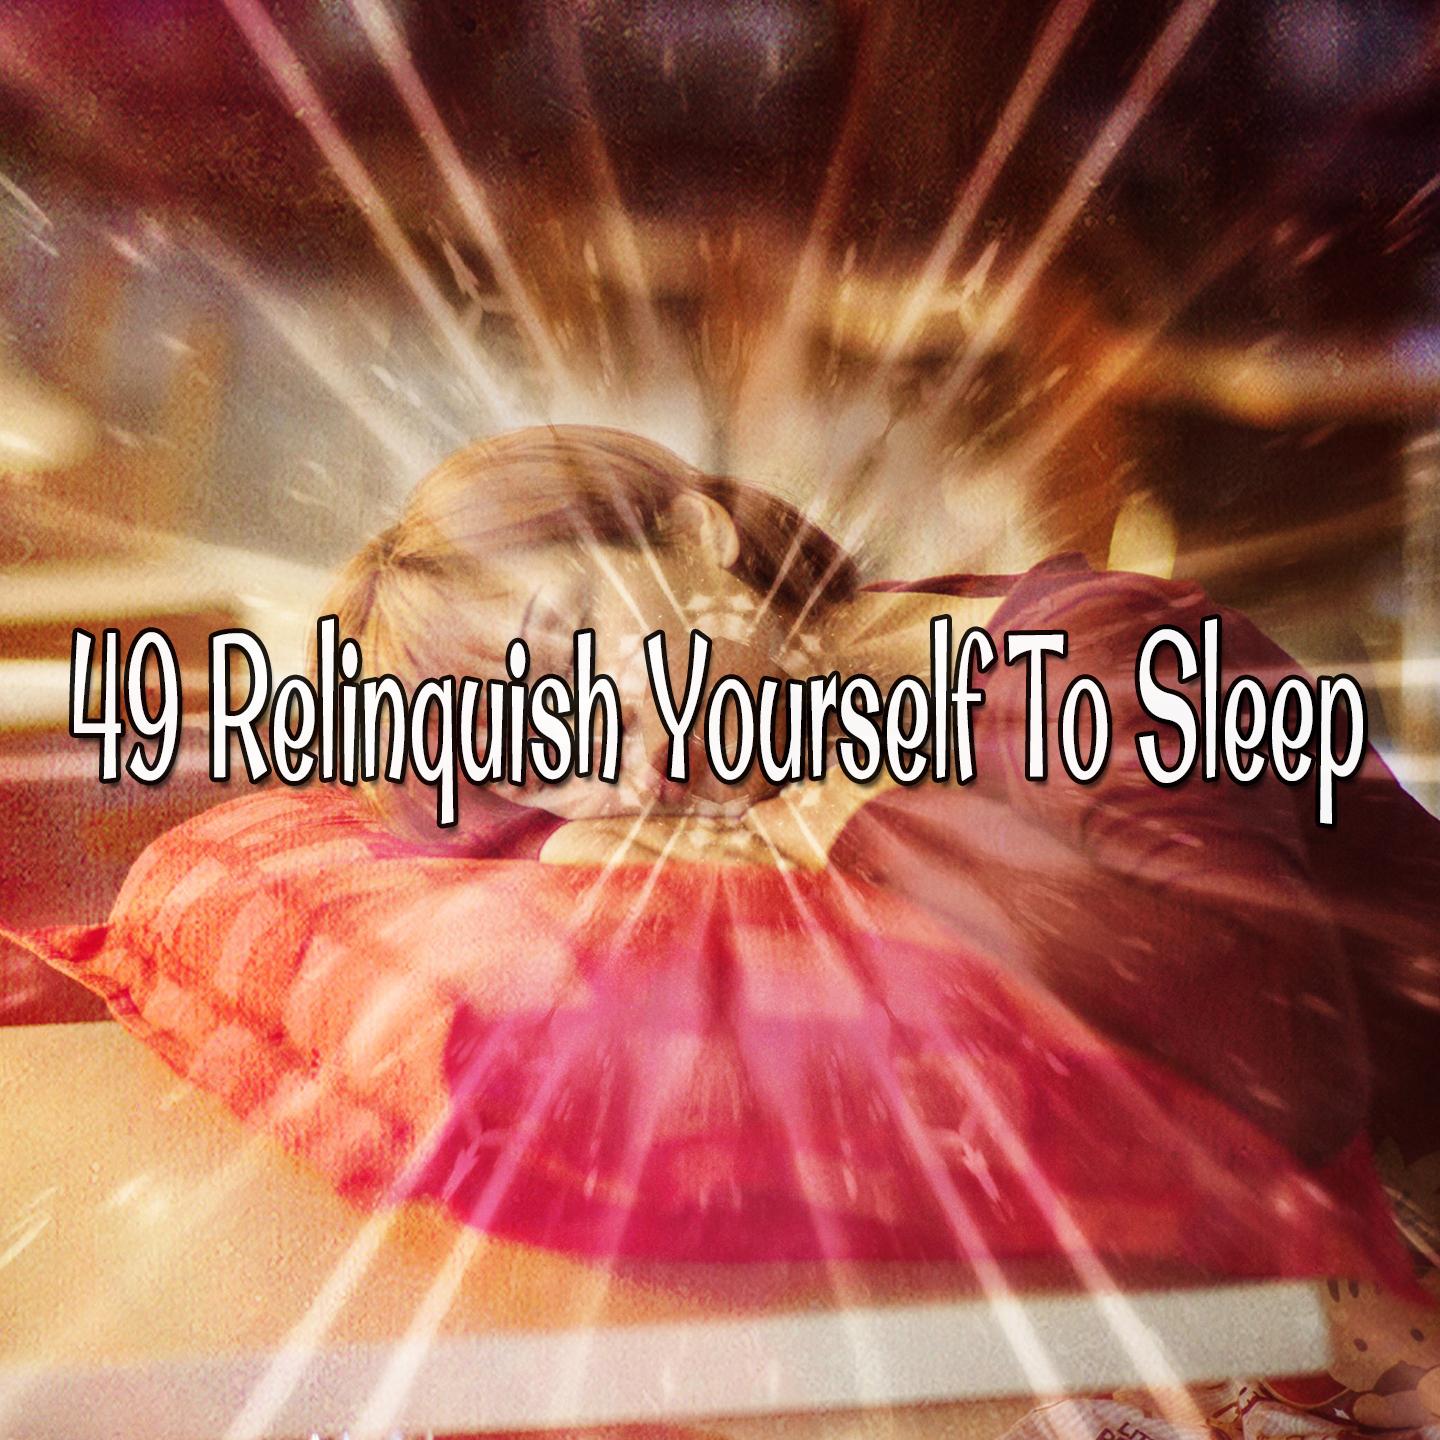 49 Relinquish Yourself To Sleep